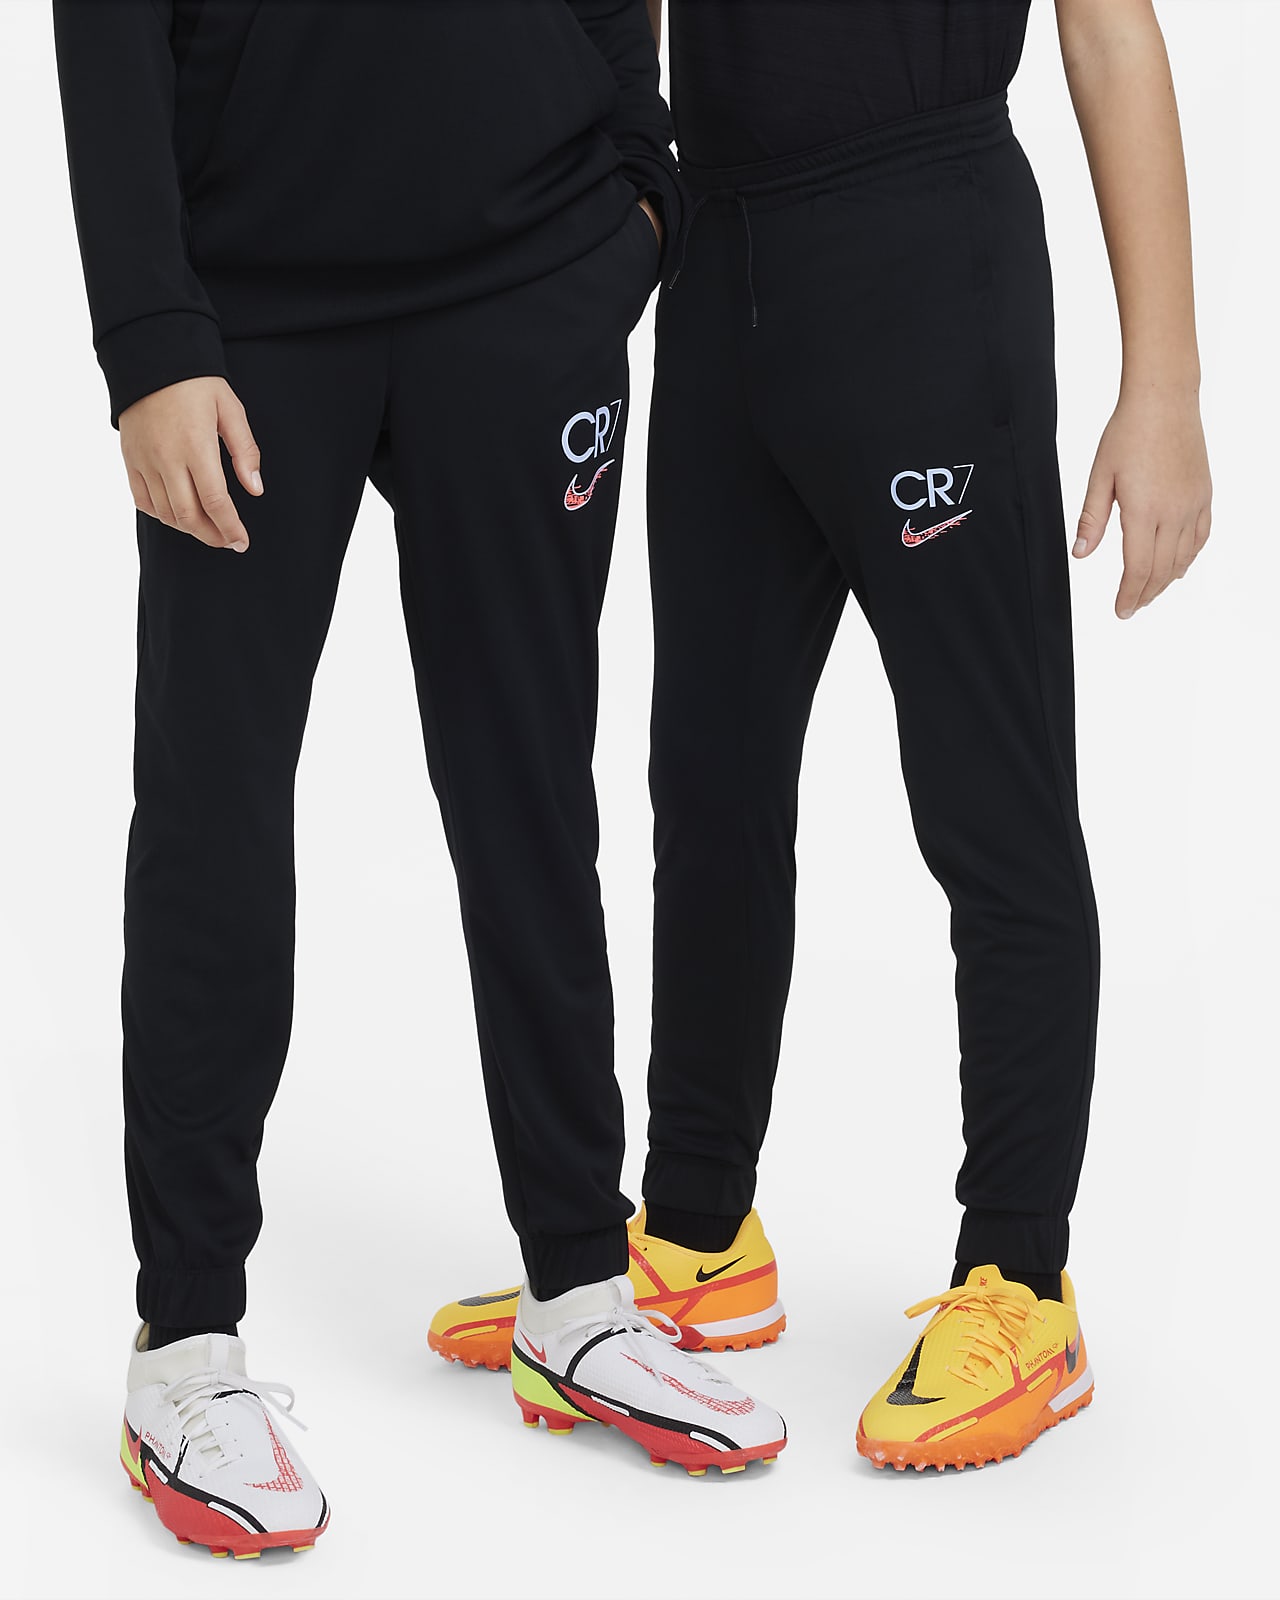 CR7-fodboldbukser større børn. Nike DK